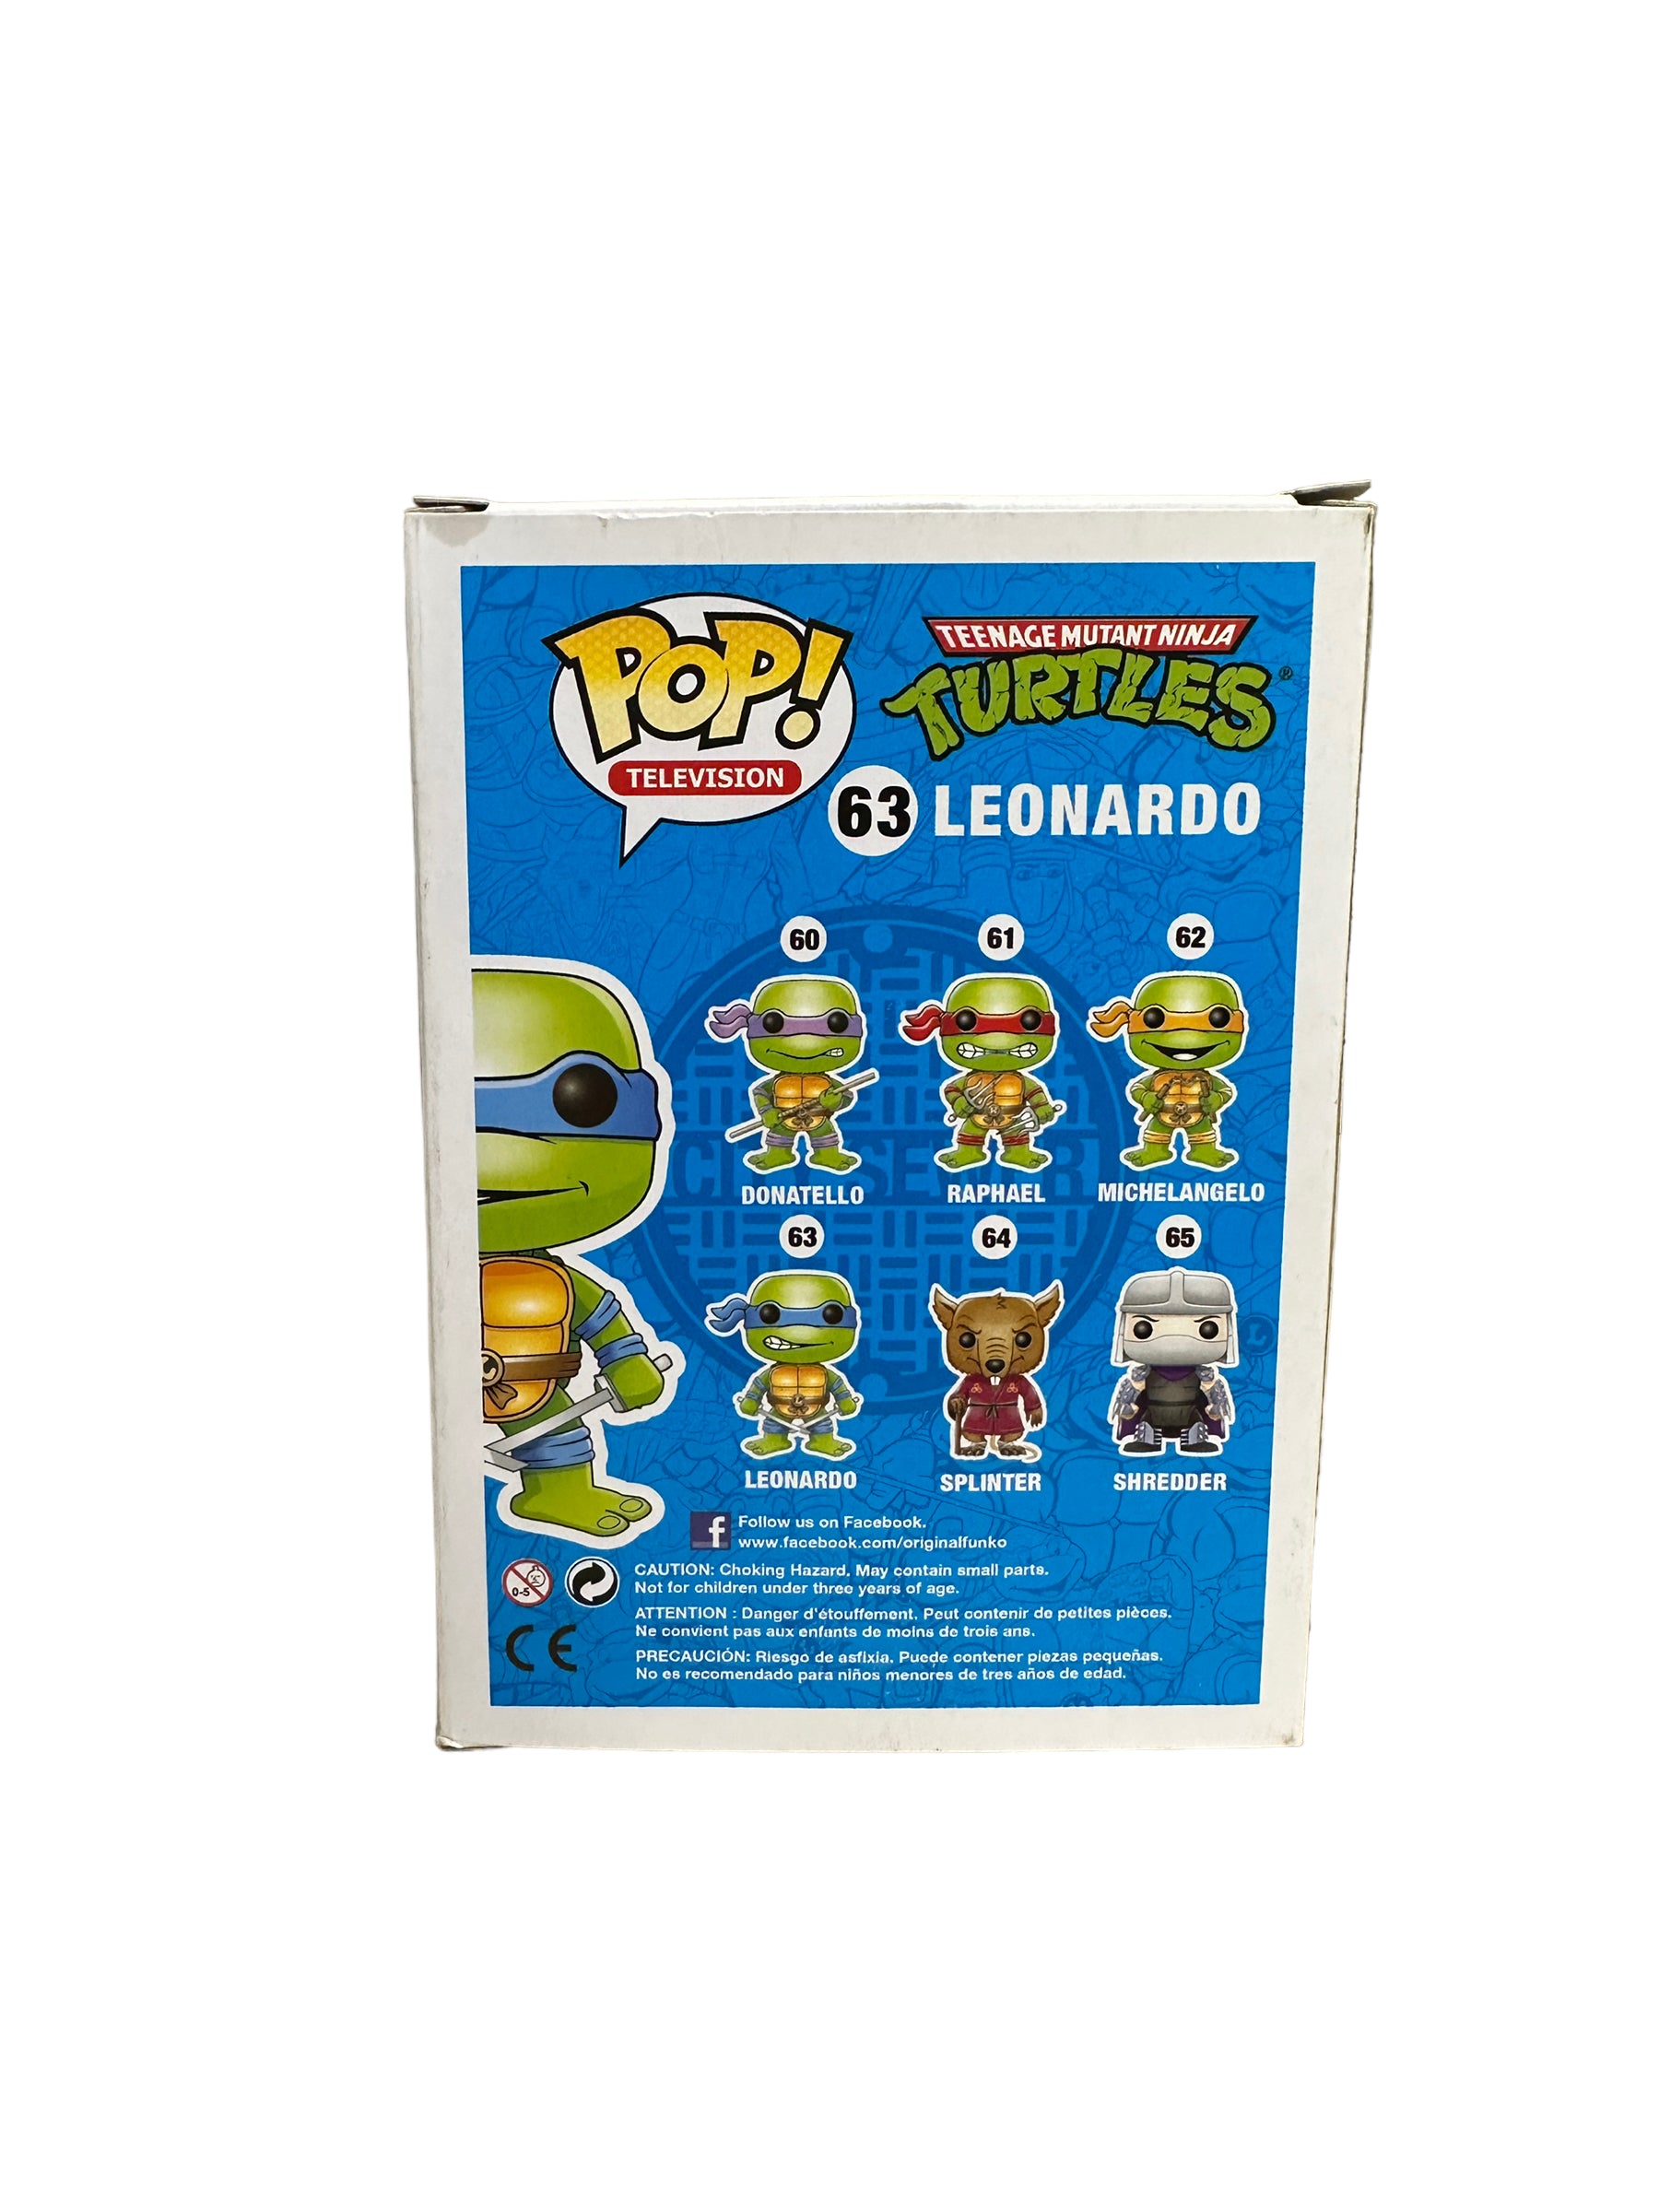 Teenage Mutant Ninja Turtles (Metallic) Funko Pop Set! - SDCC 2013 Exclusives LE1008 Pcs each - Condition varies